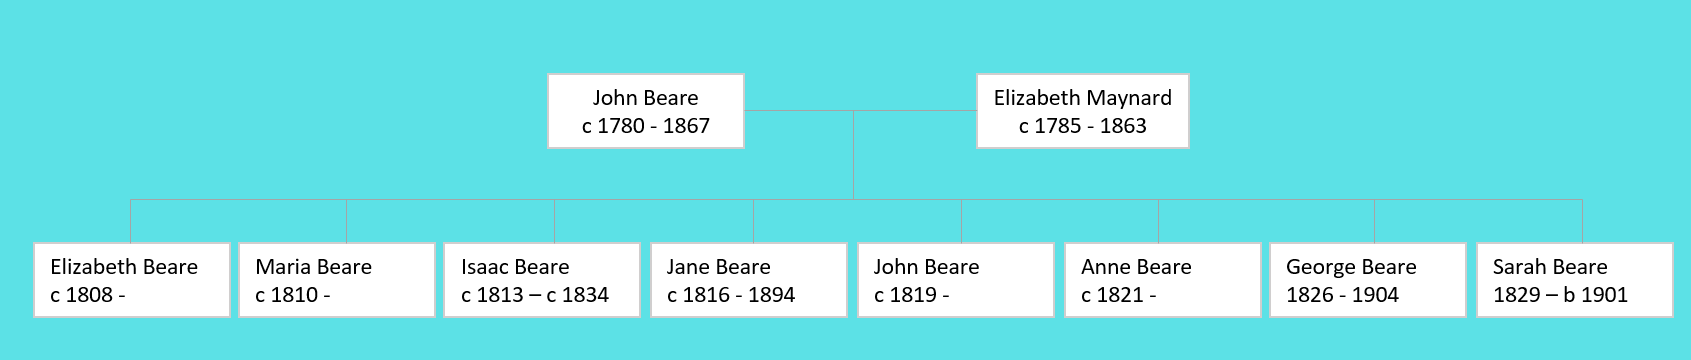 John Beare Family